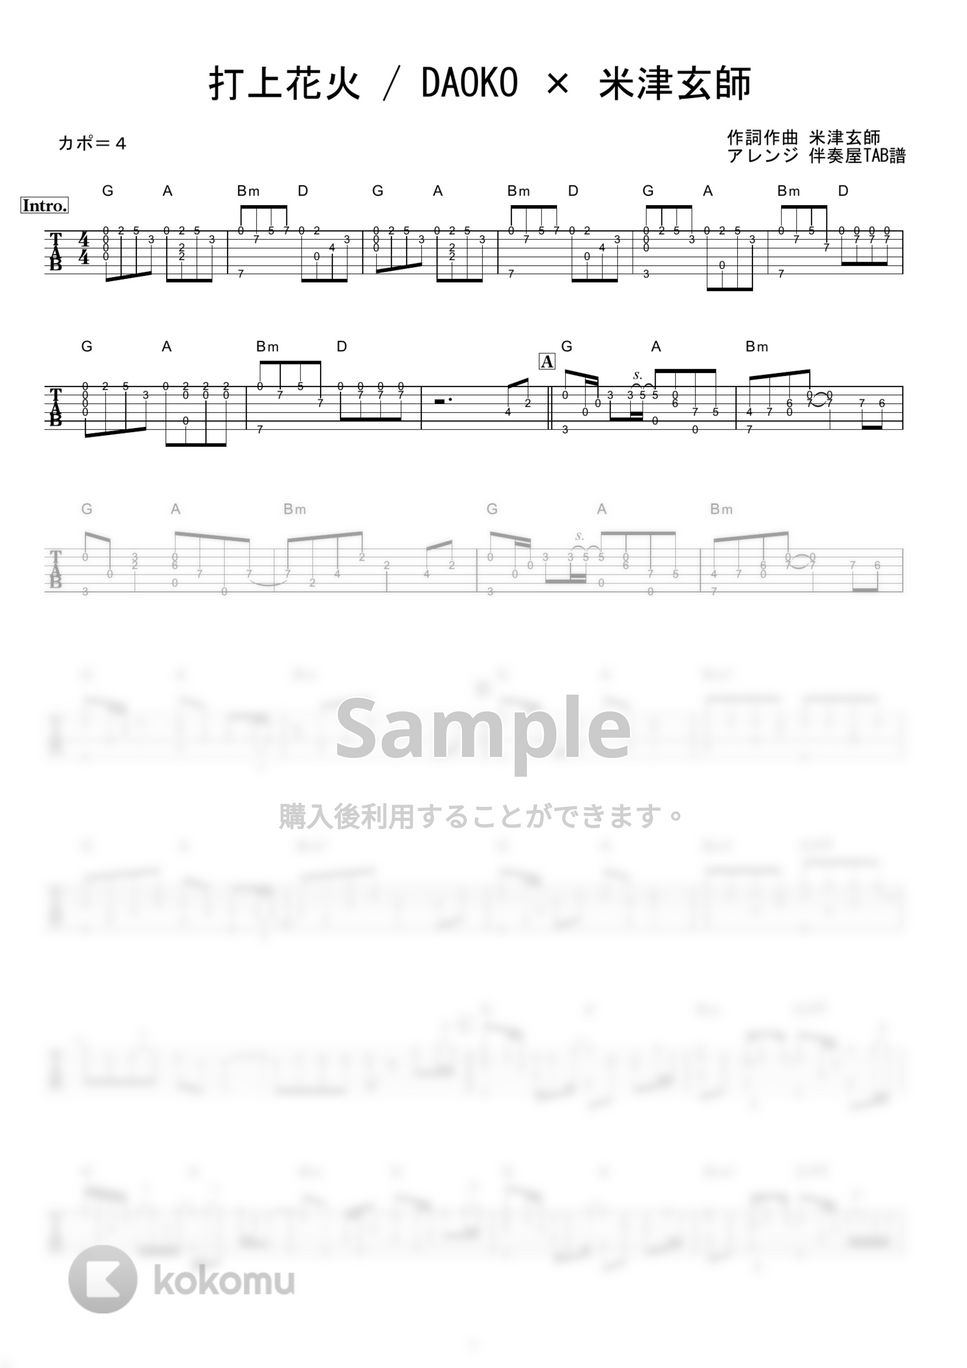 DAOKO × 米津玄師 - 打上花火 (ソロギター) by 伴奏屋TAB譜